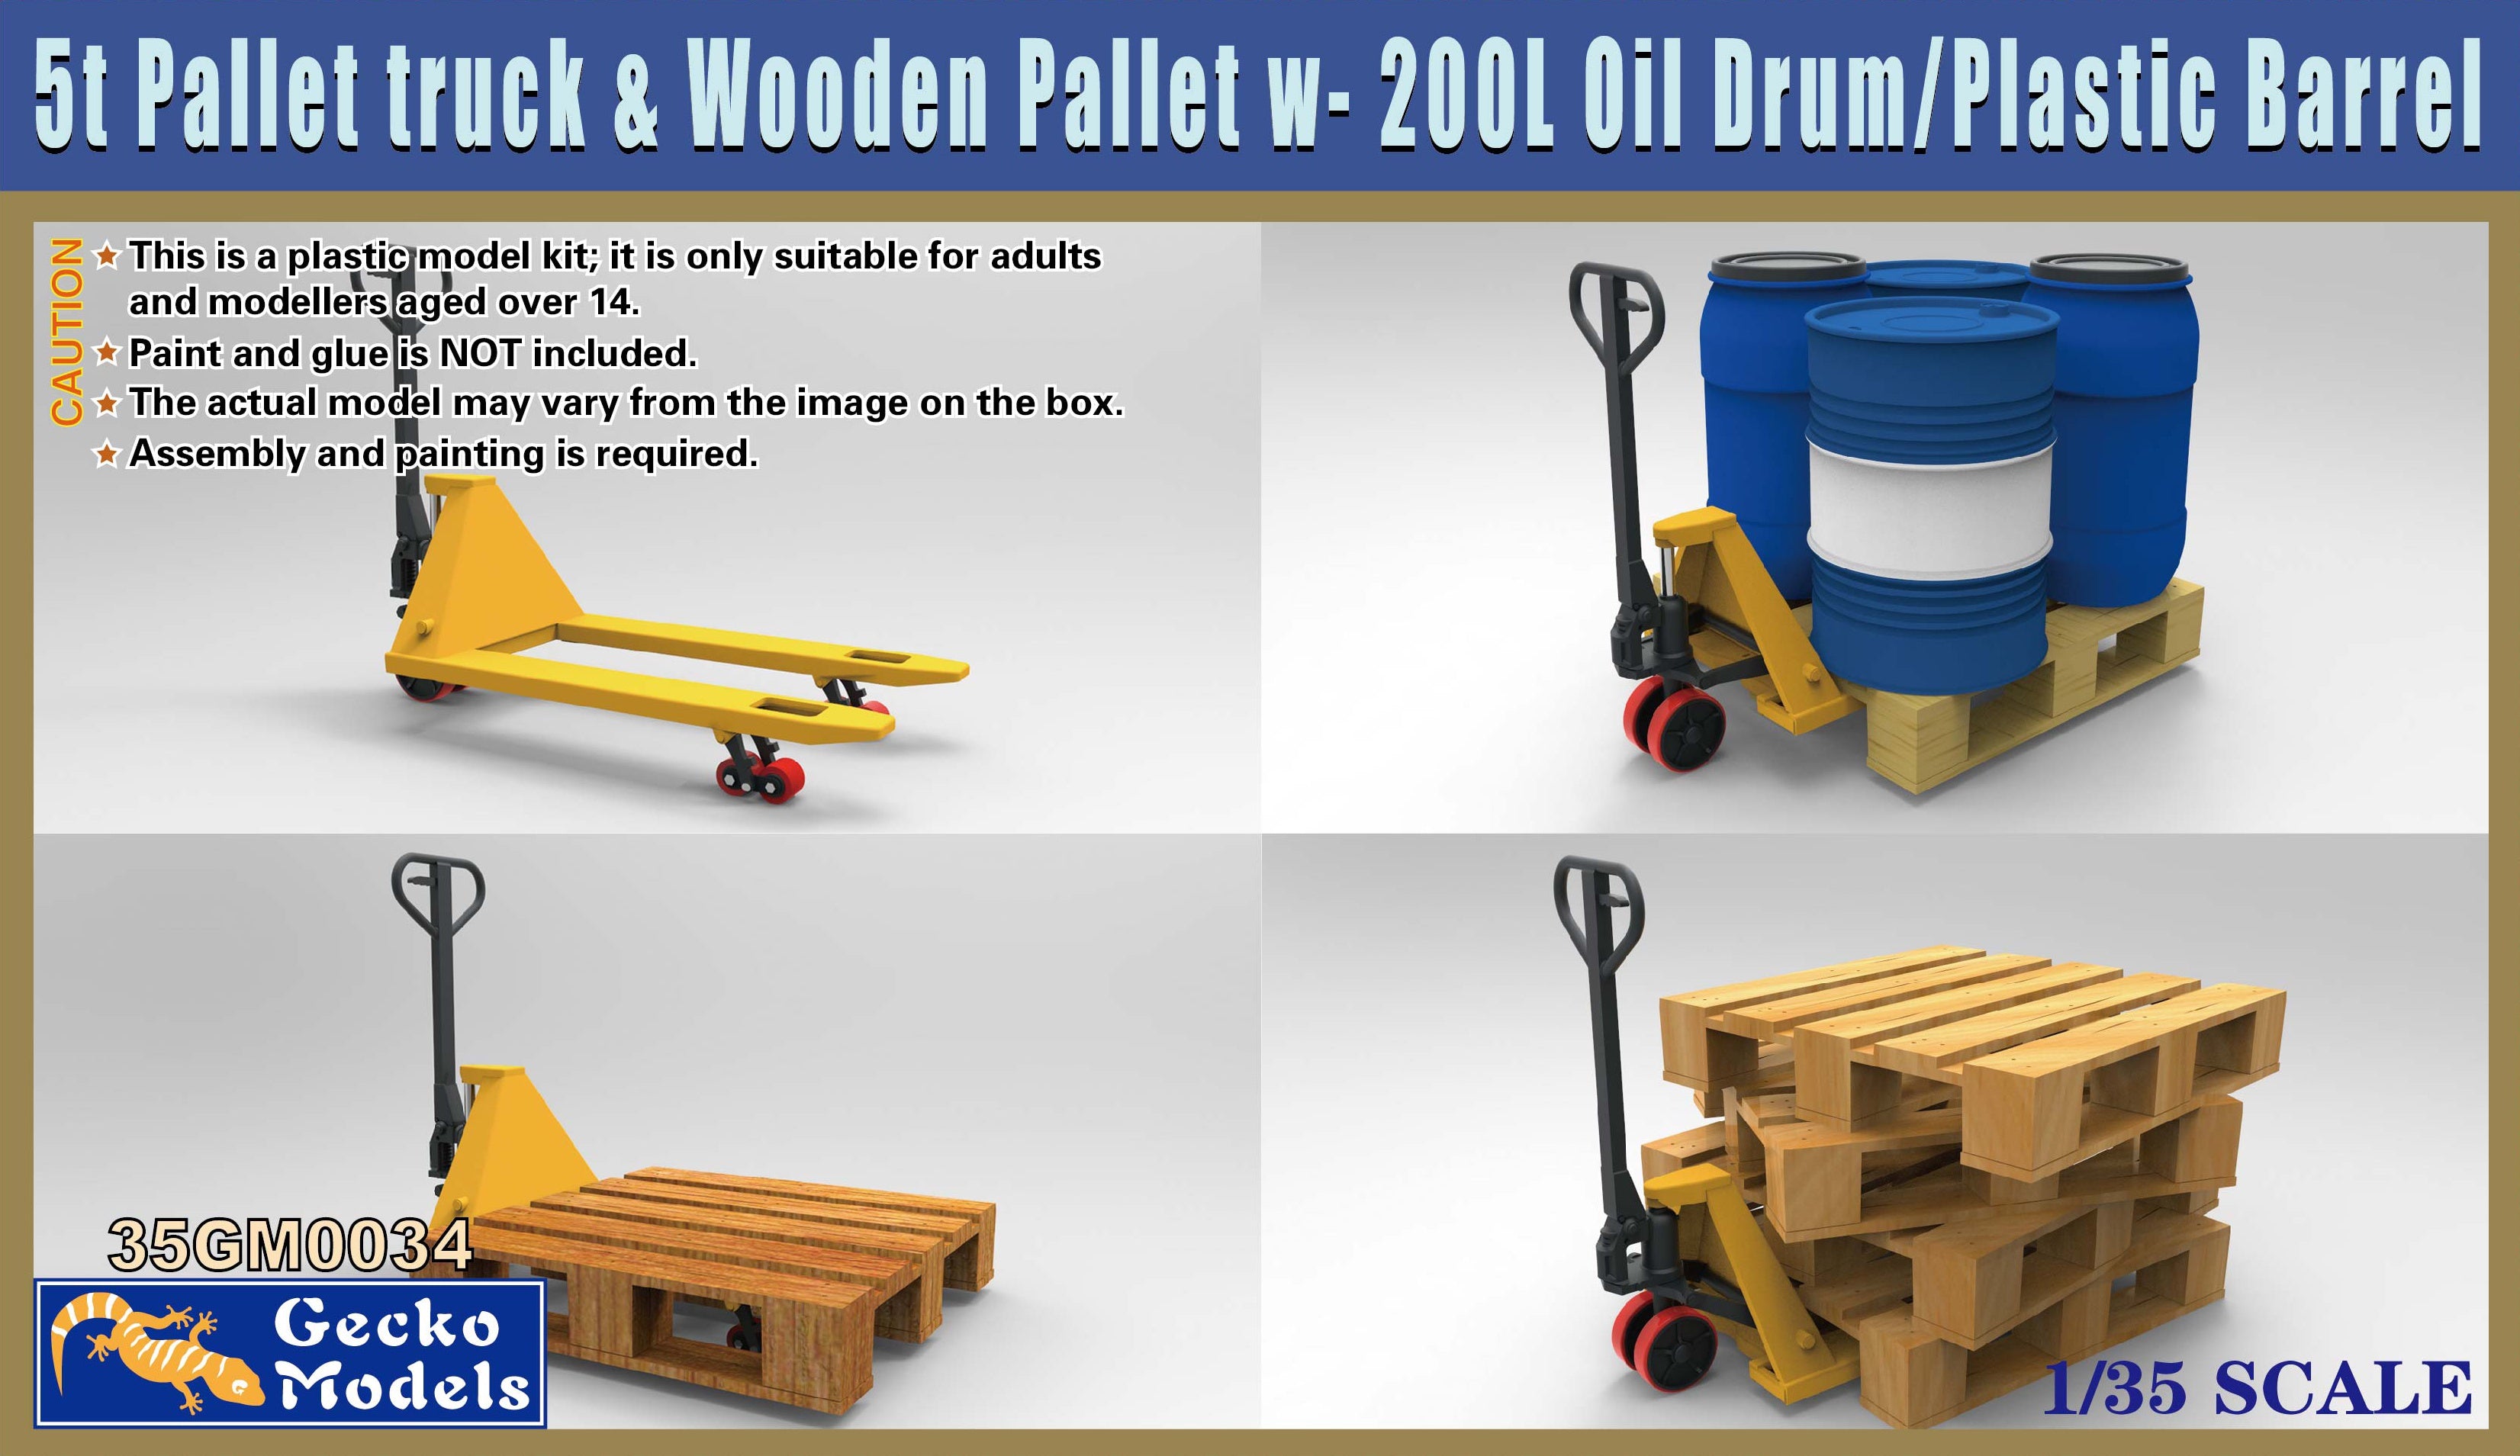 5t Pallet truck & Wooden Pallet w- 200L Oil Drum-Plastic Barrel Set 1/35 #35GM0034 by Gecko